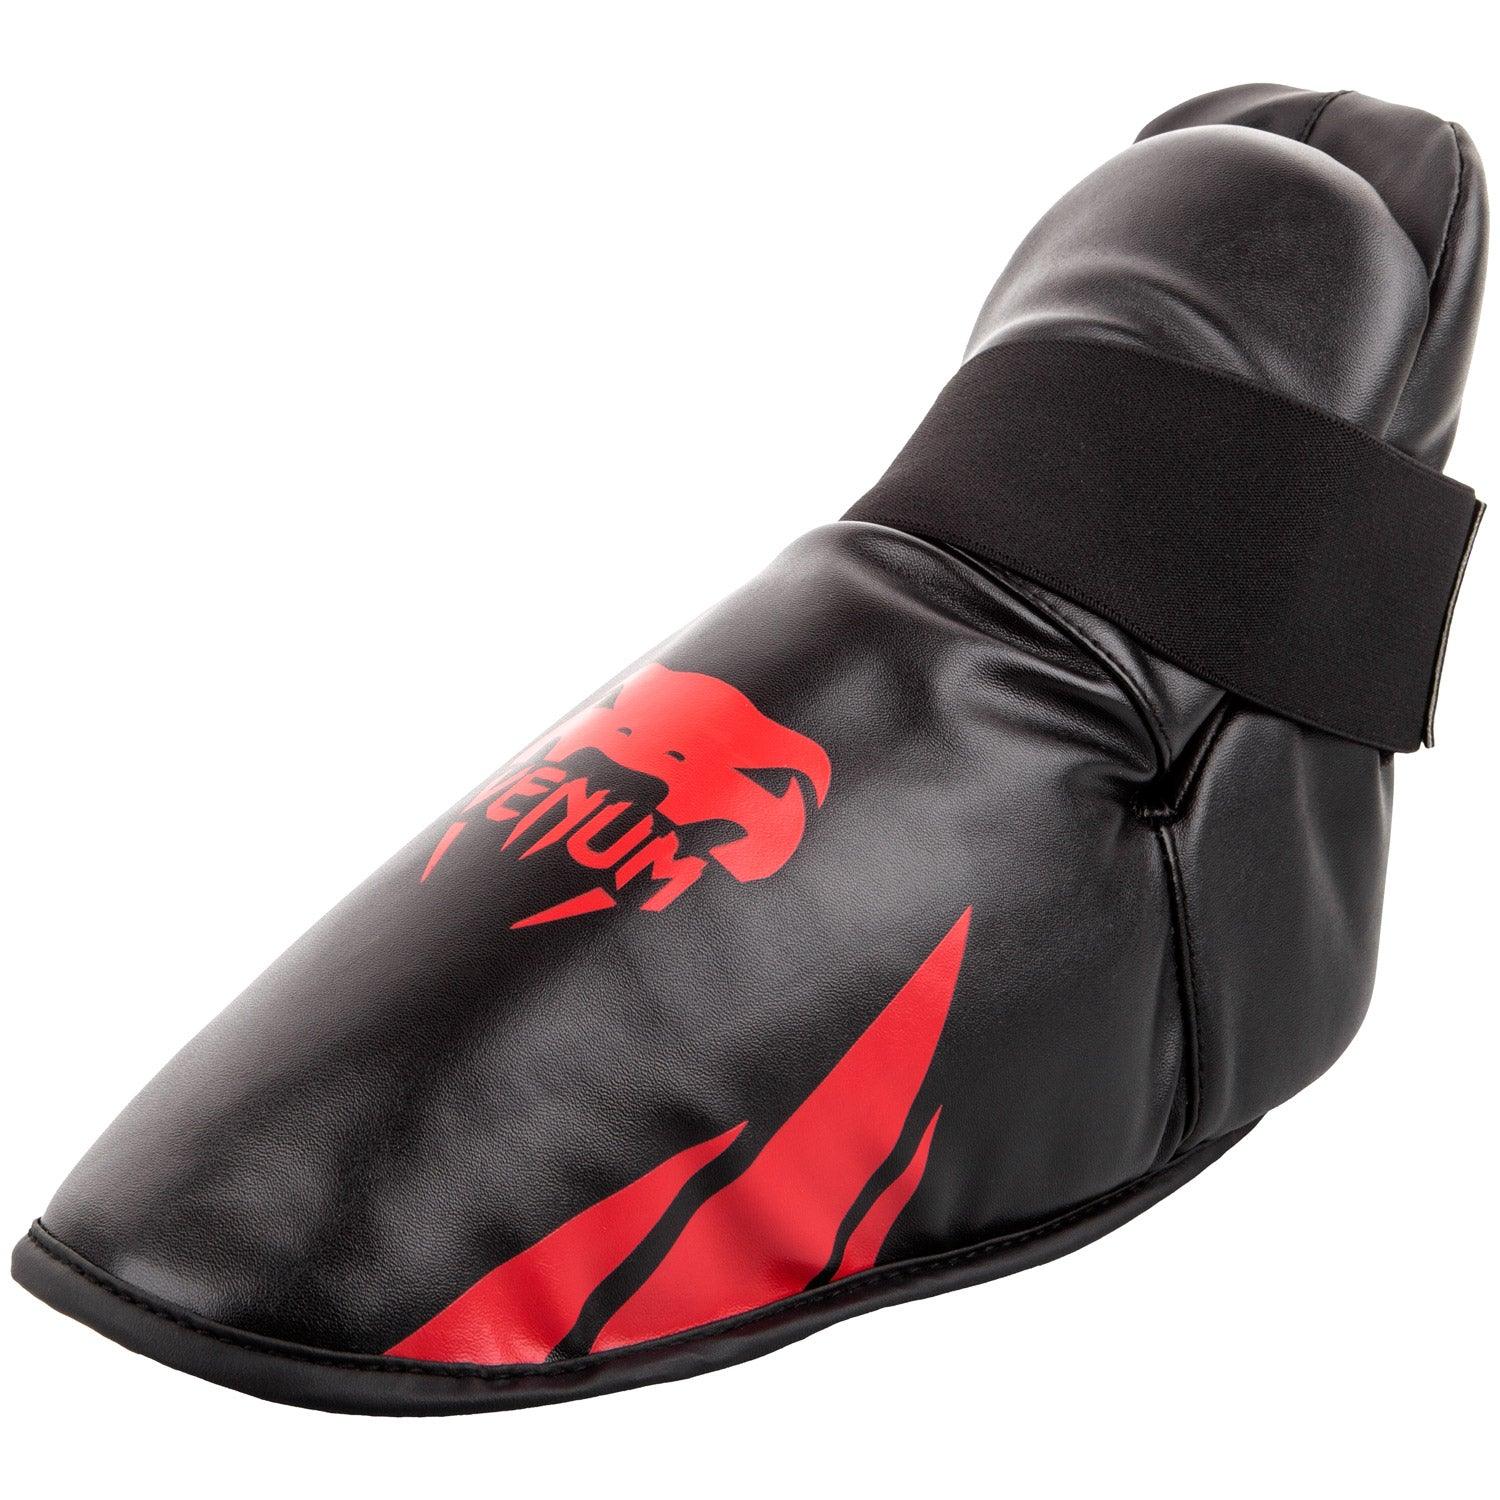 Venum Challenger Foot Gear - Black/Red Picture 2